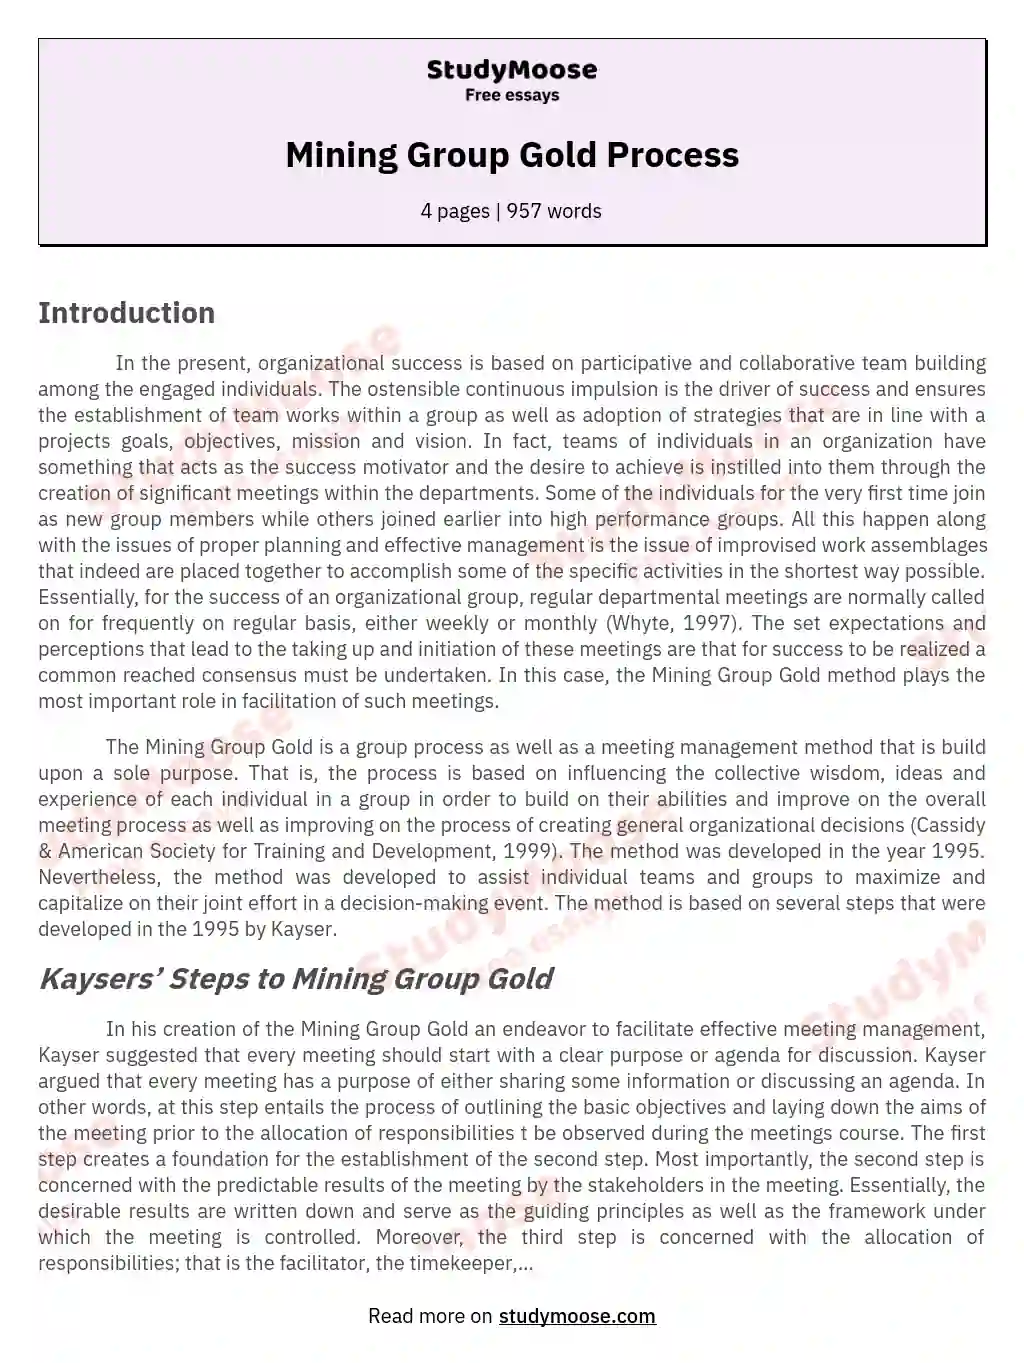 Mining Group Gold Process essay